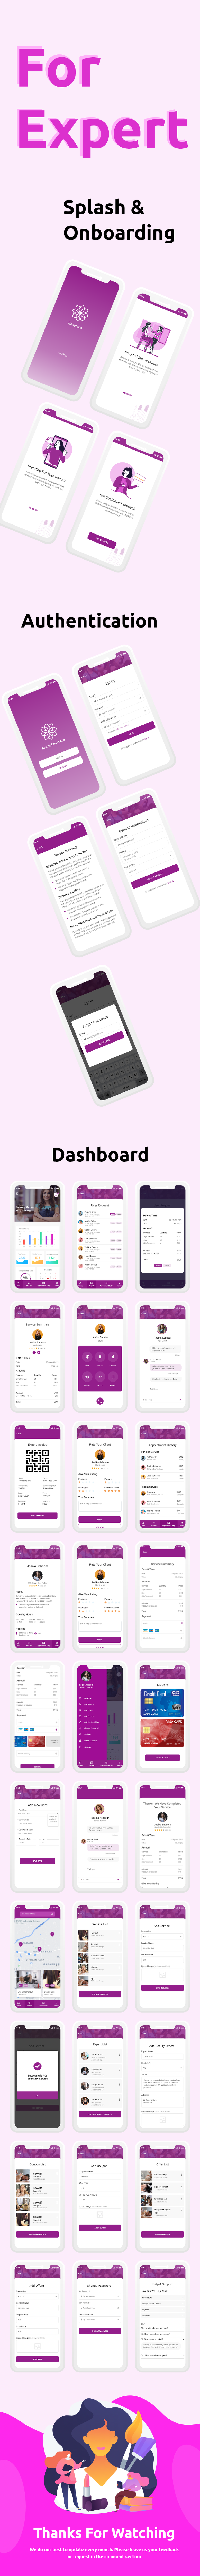 Beautyon - Beauty Parlour Booking & Beauty Expert Mobile App UI Kit - 3